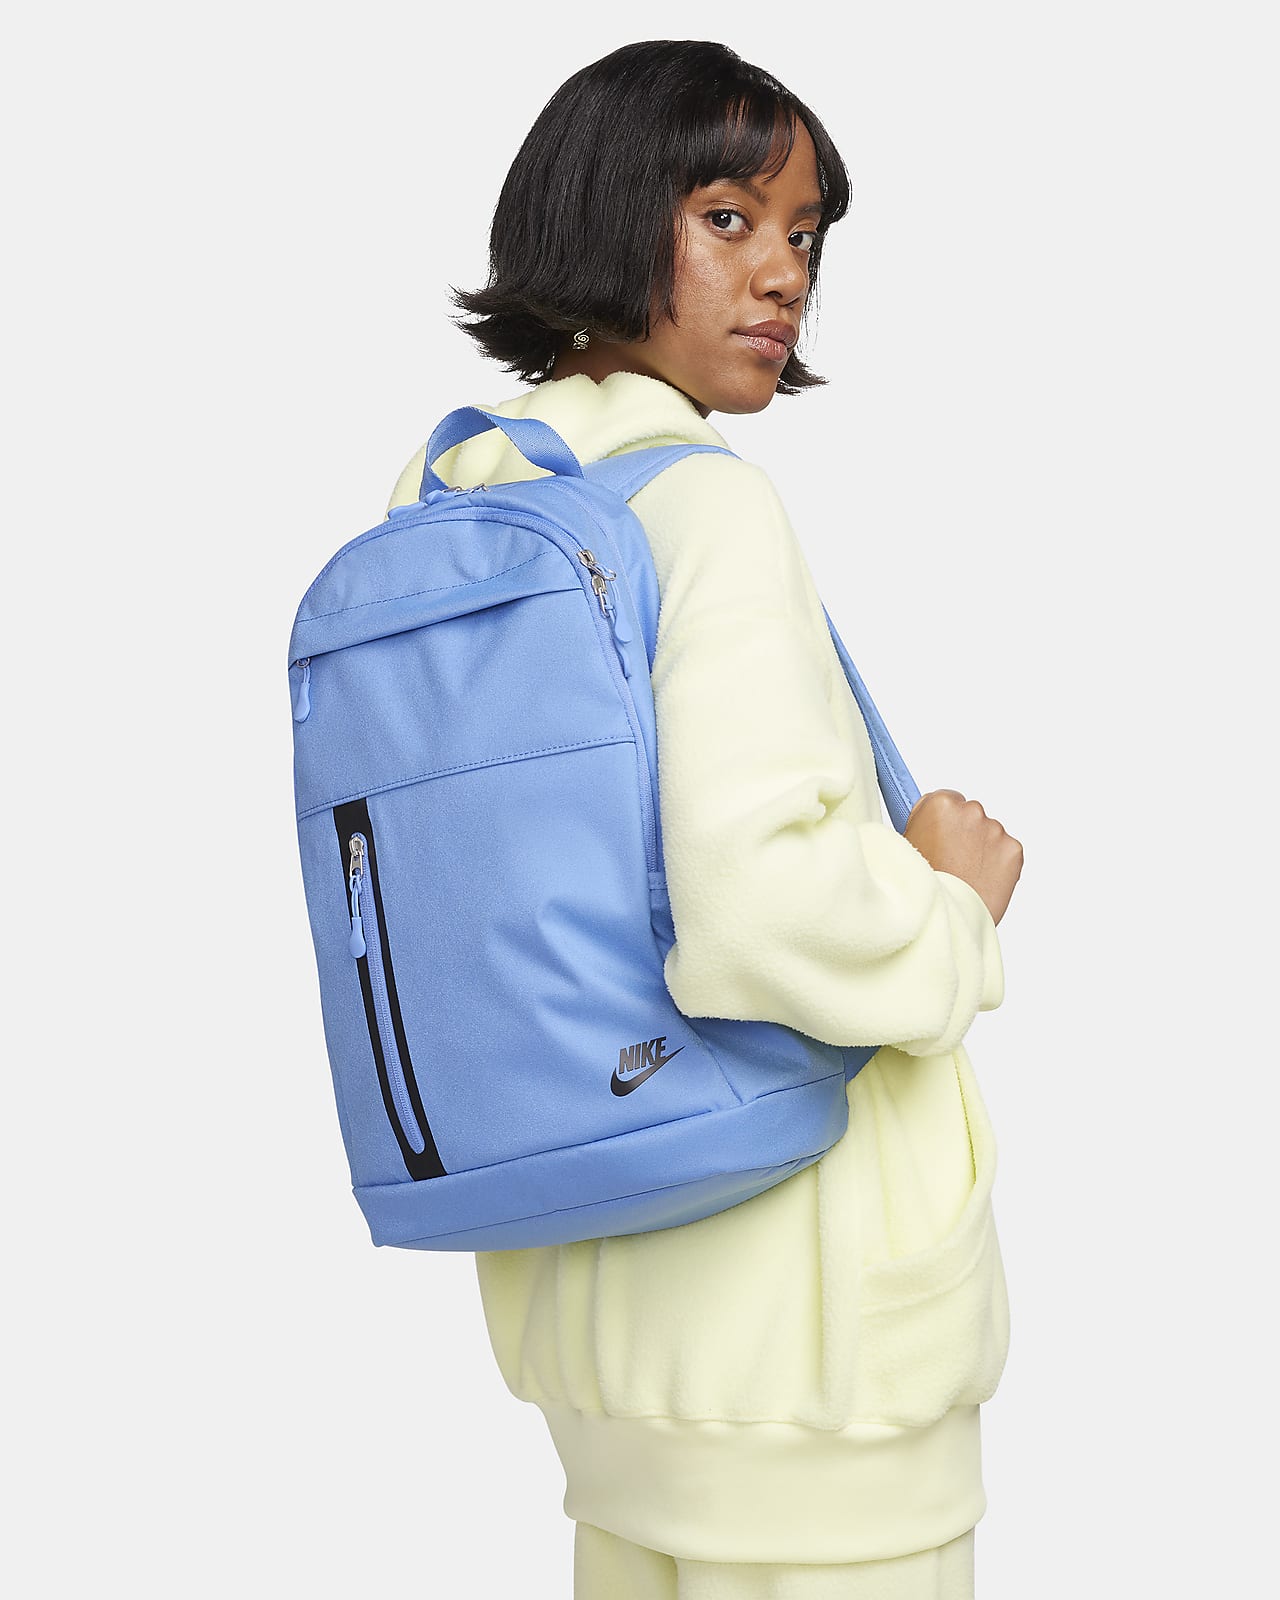 Men's backpacks and bags Nike